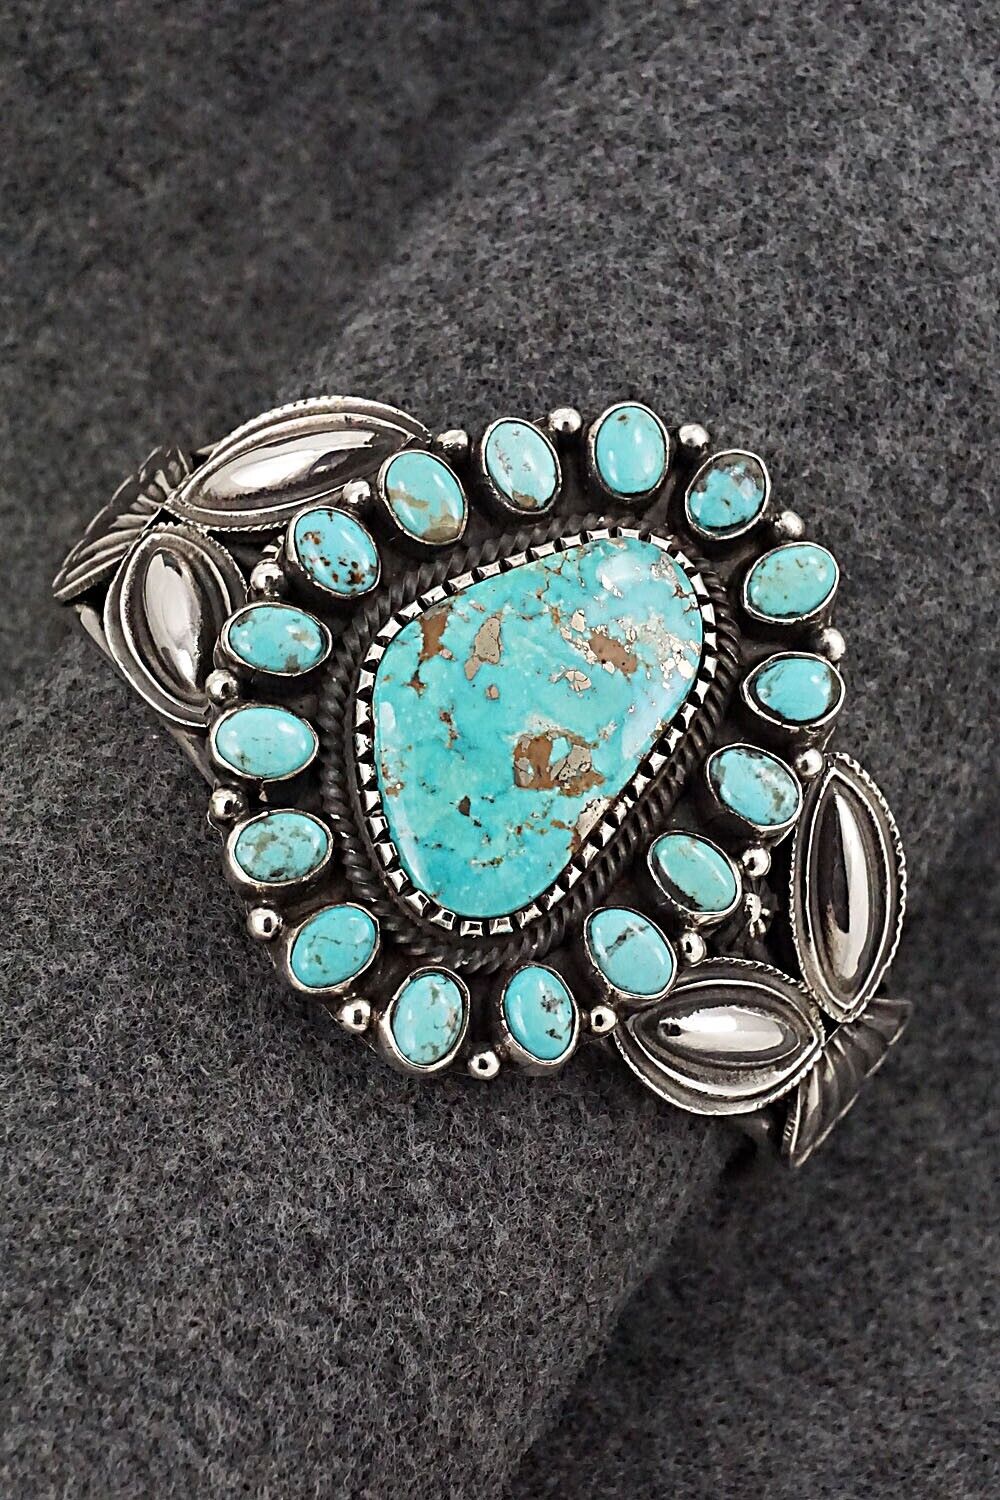 Turquoise & Sterling Silver Bracelet - Leon Martinez